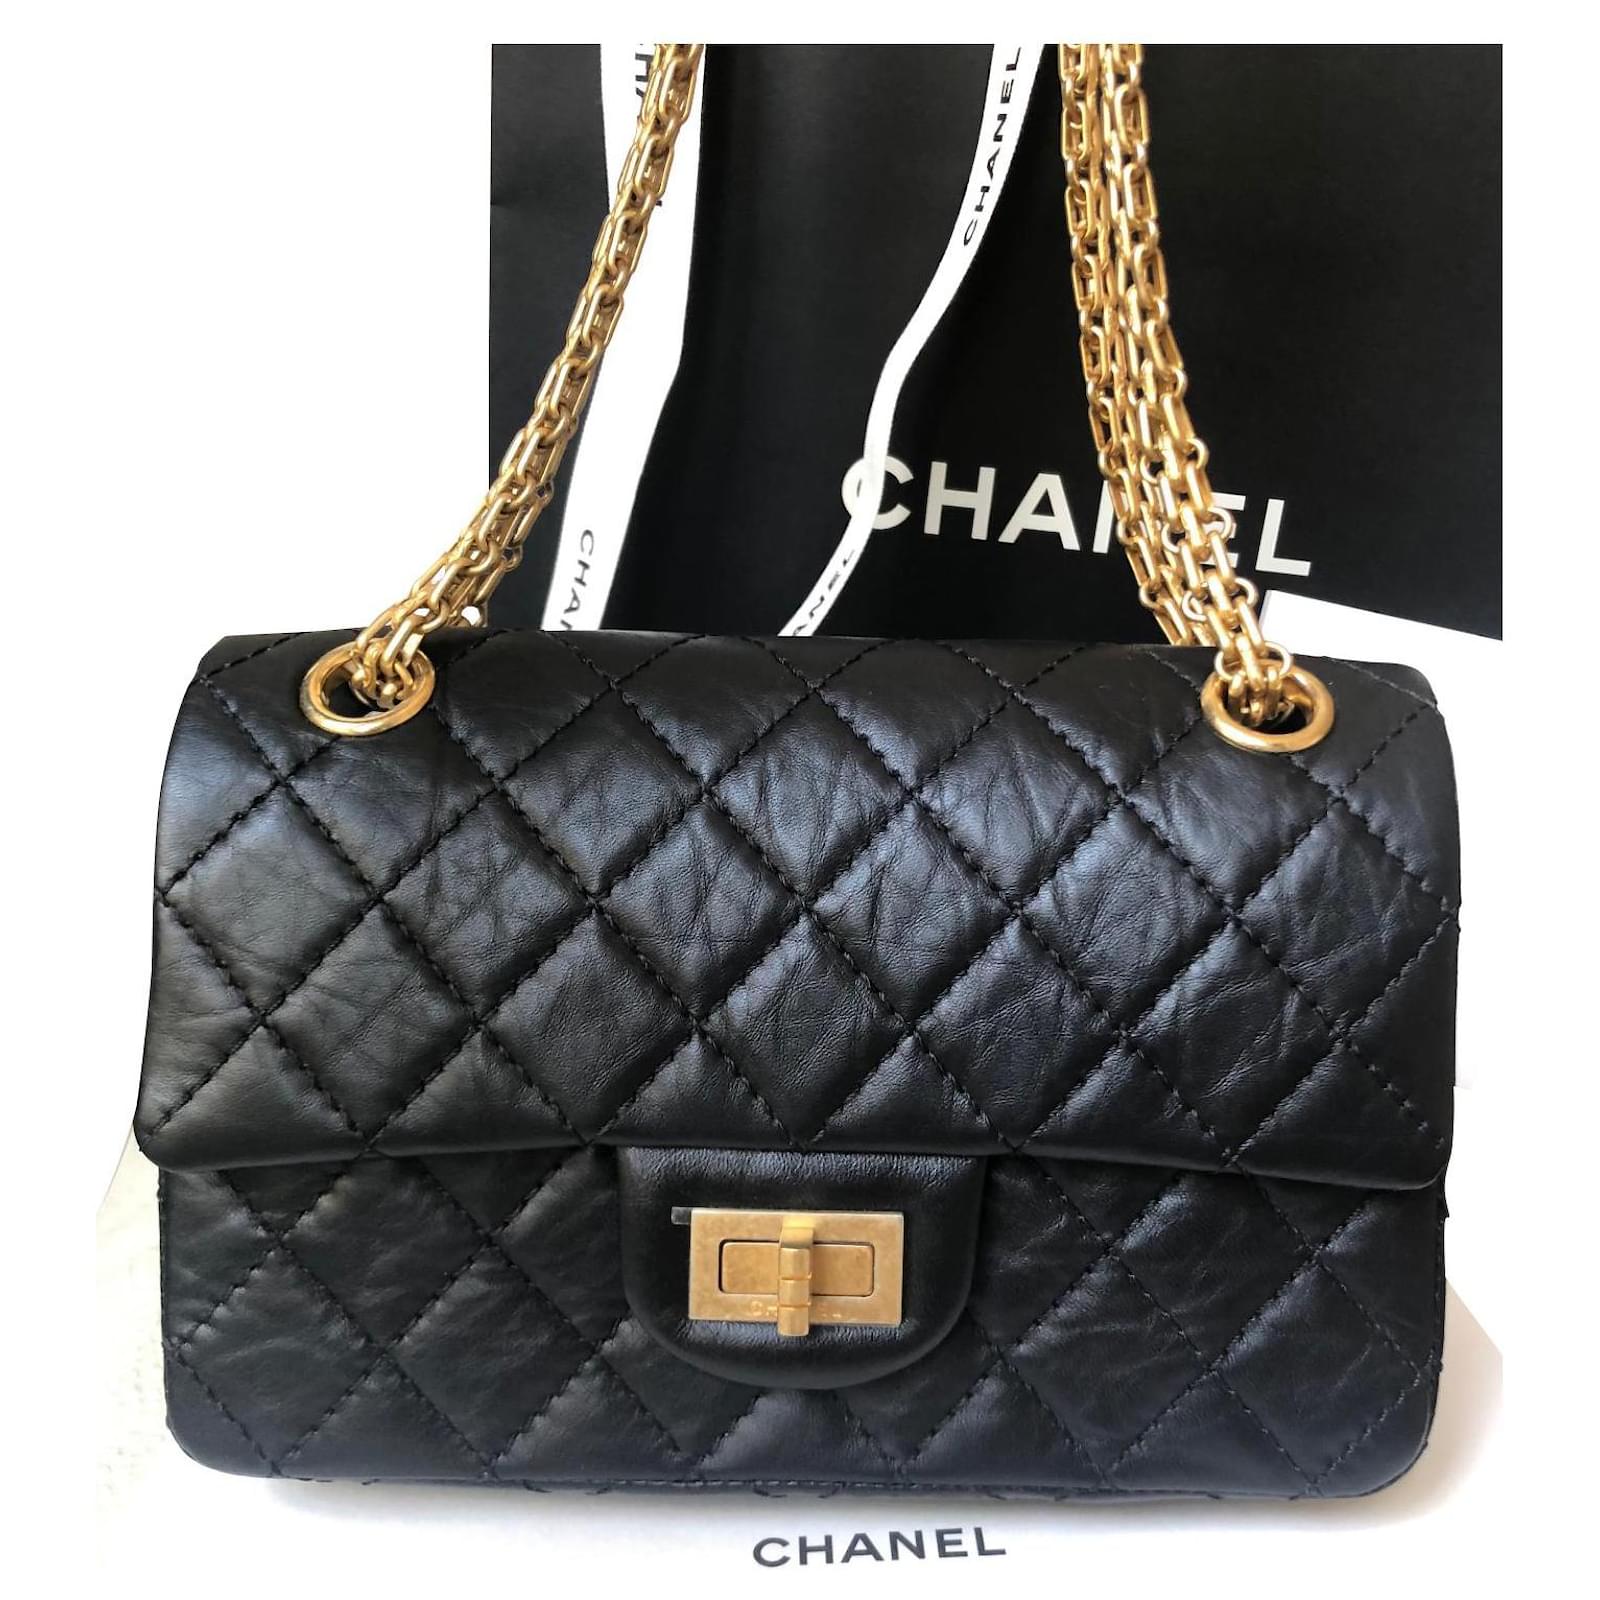 Chanel mini 2.55 New black calf leather/gold hardware